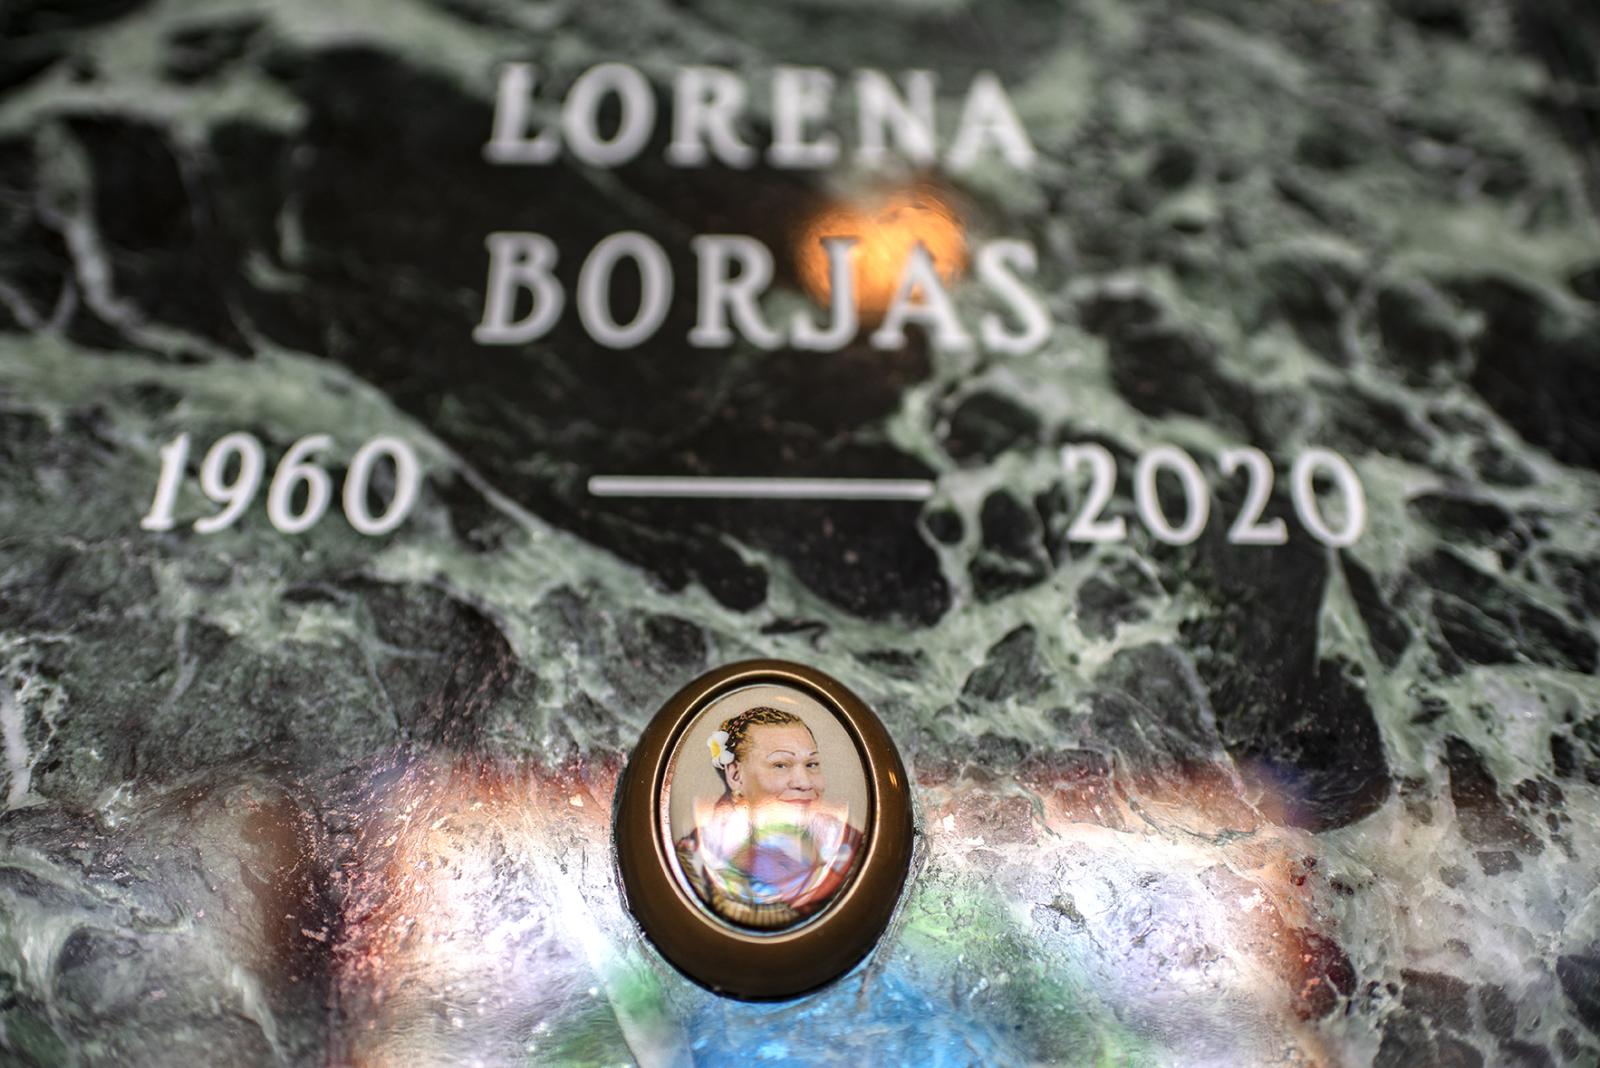  Detail of Lorena Borjas graves...ohn Cemetery in New York City. 